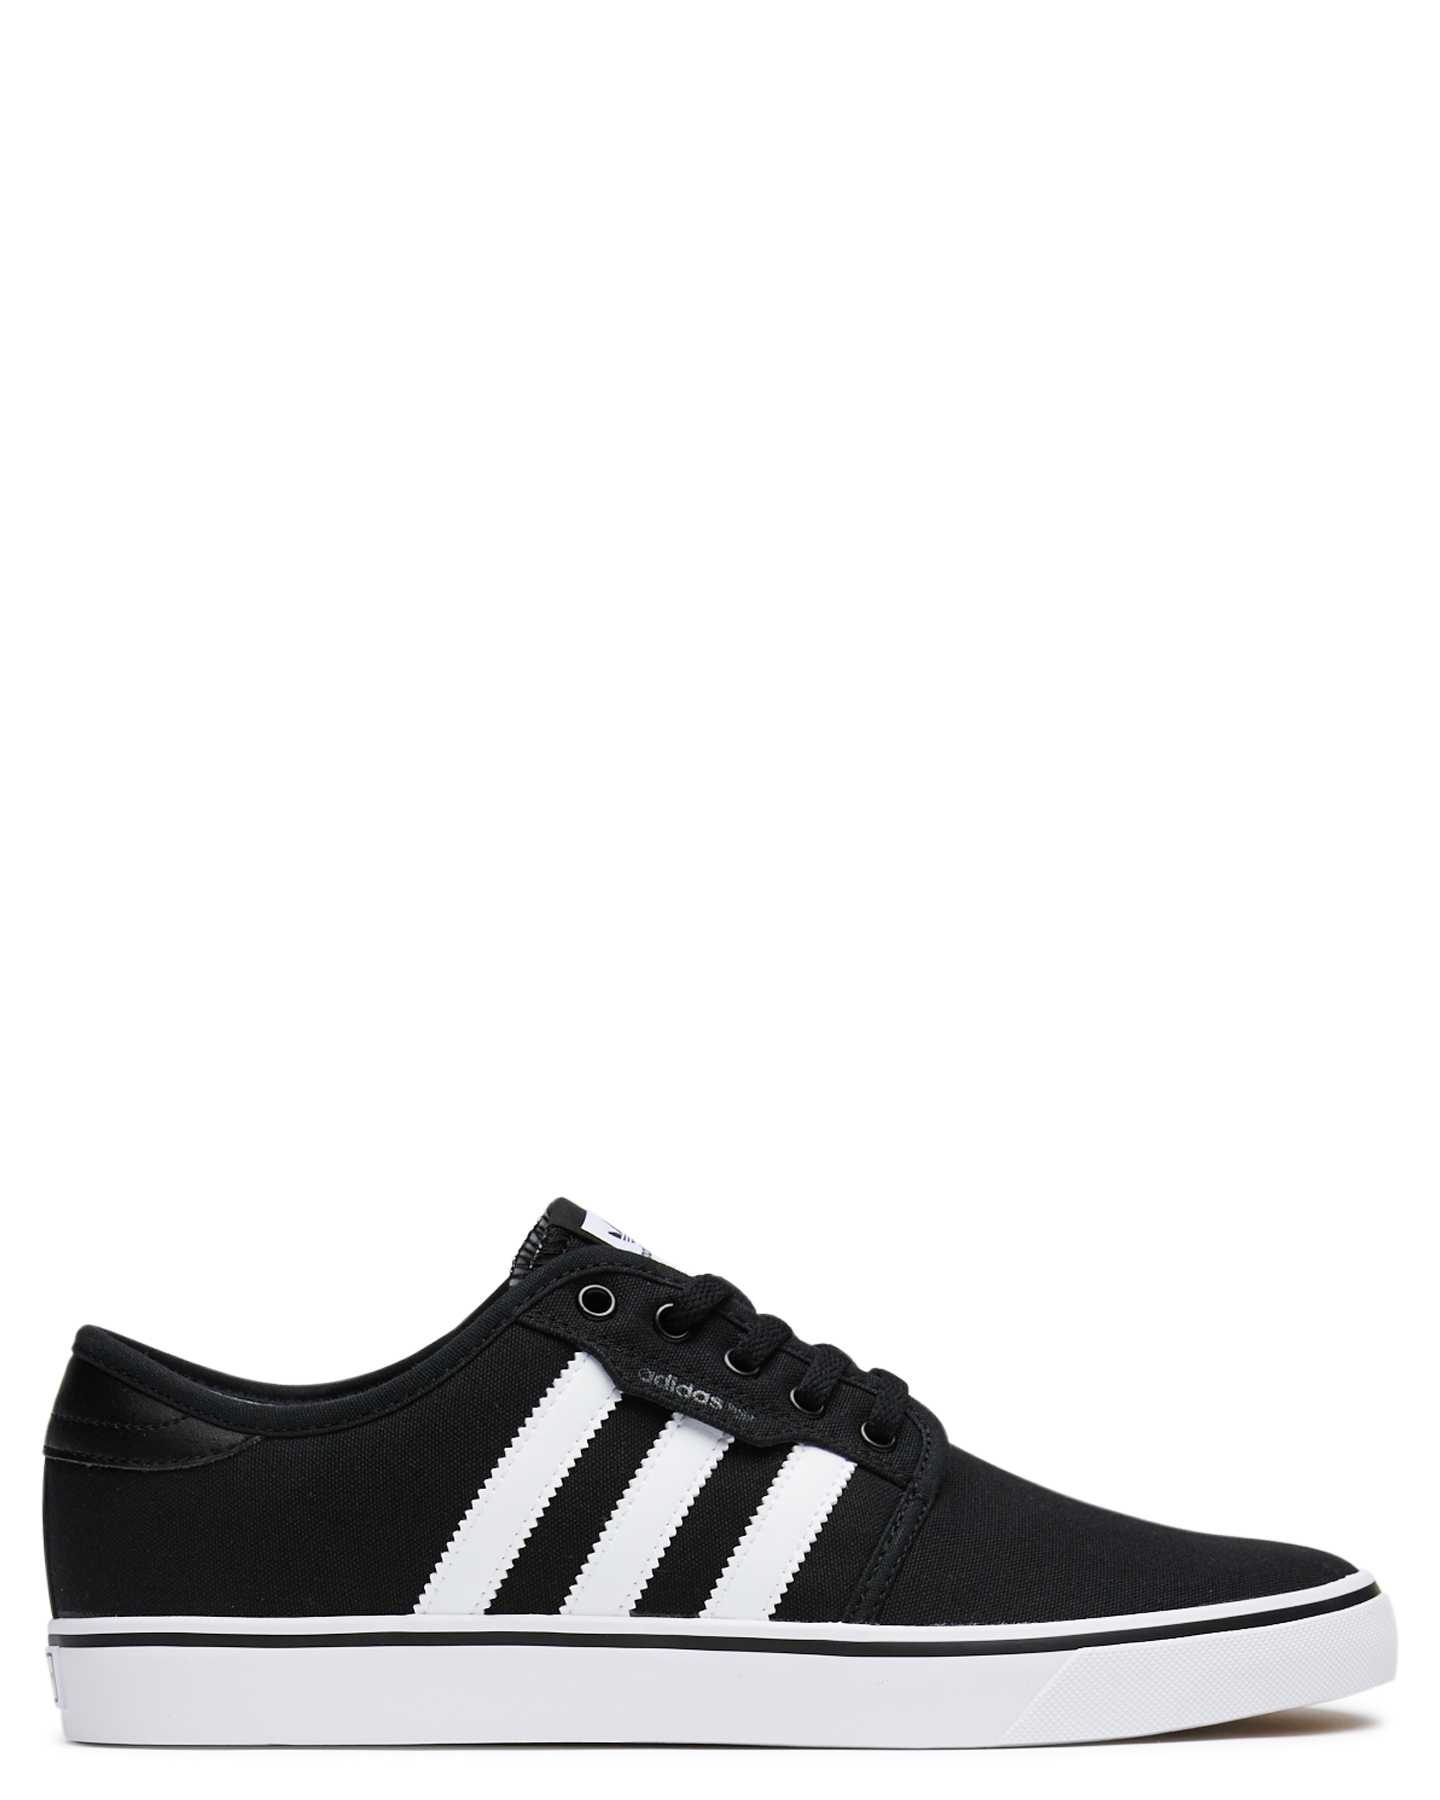 Adidas Mens Seeley Shoe - Black White 